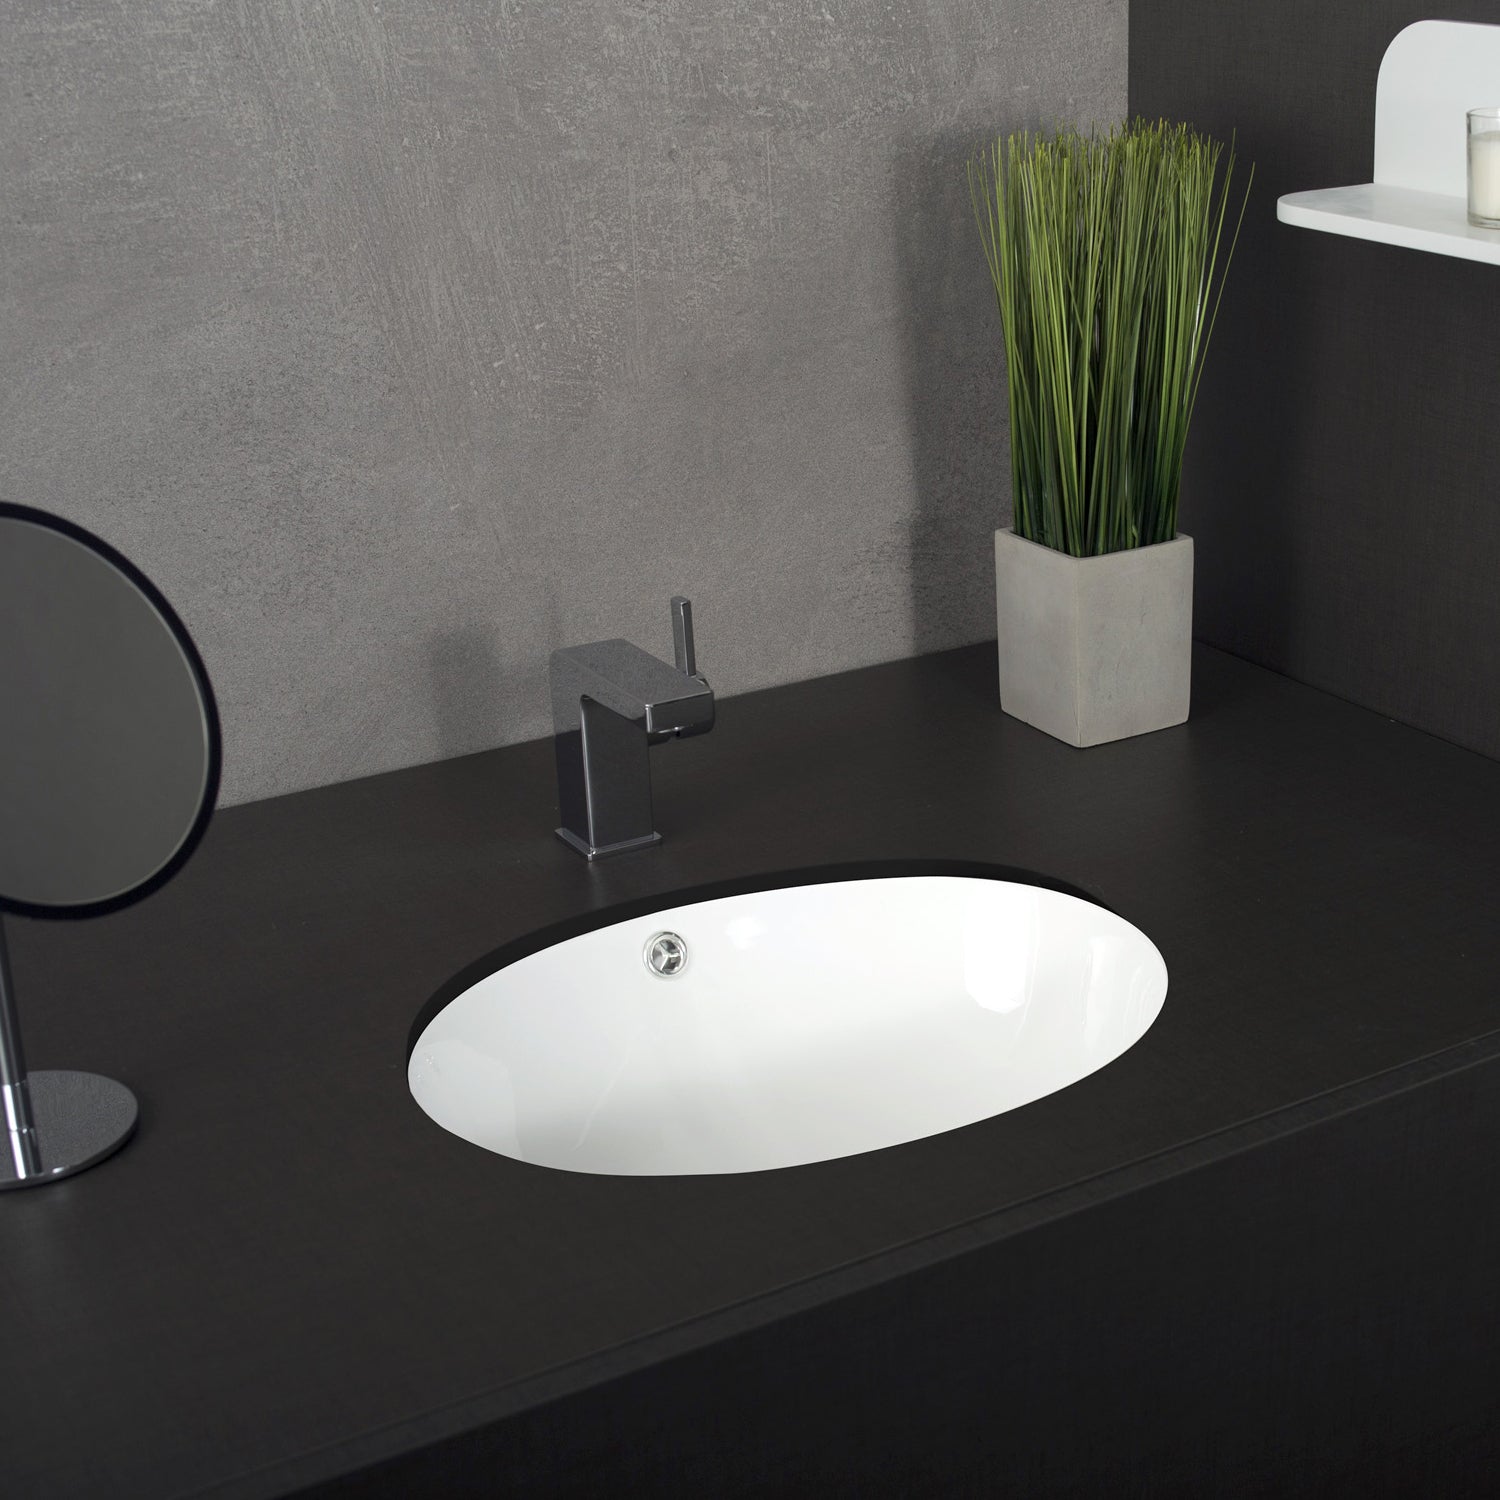 DAX Ceramic Oval Single Bowl Undermount Bathroom Sink, White Finish,  18-1/16 x 15-13/16 x 8-3/16 Inches (BSN-100)